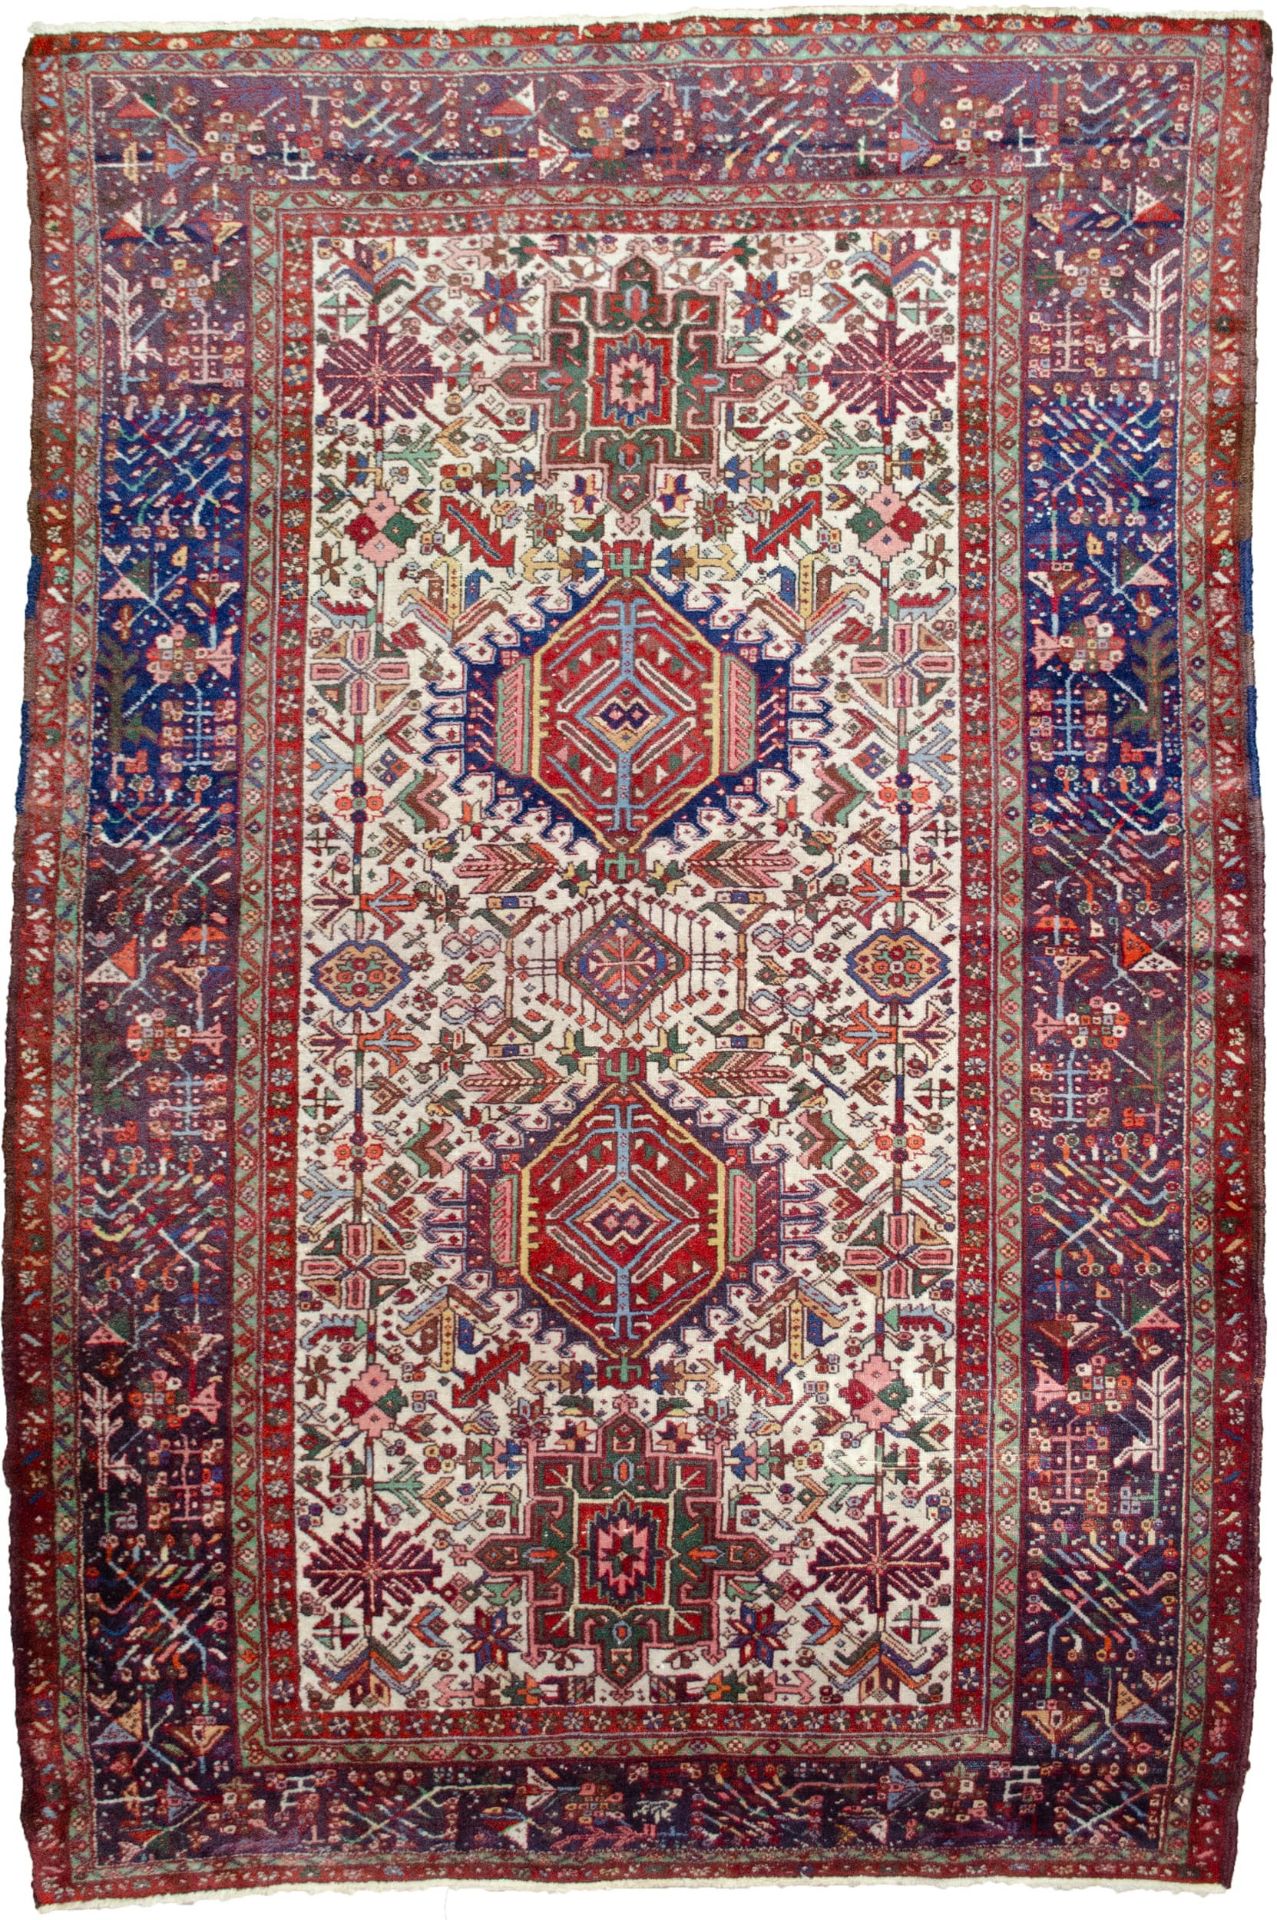 A vintage Karaja rug, circa 1940